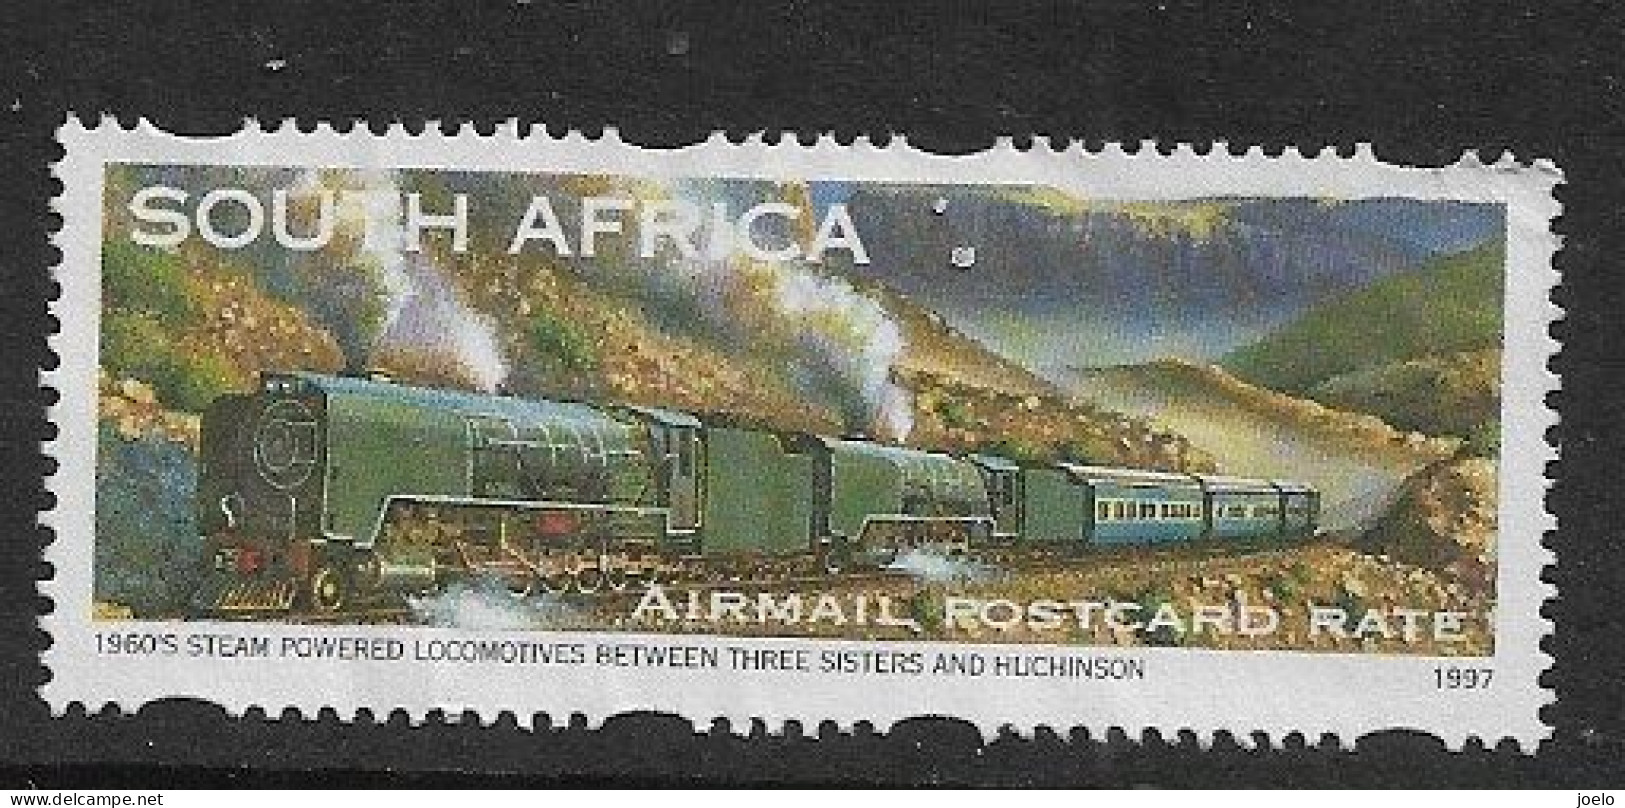 SOUTH AFRICA 1997 STEAM POWERED LOCOMOTIVE BLUE TRAIN - Oblitérés